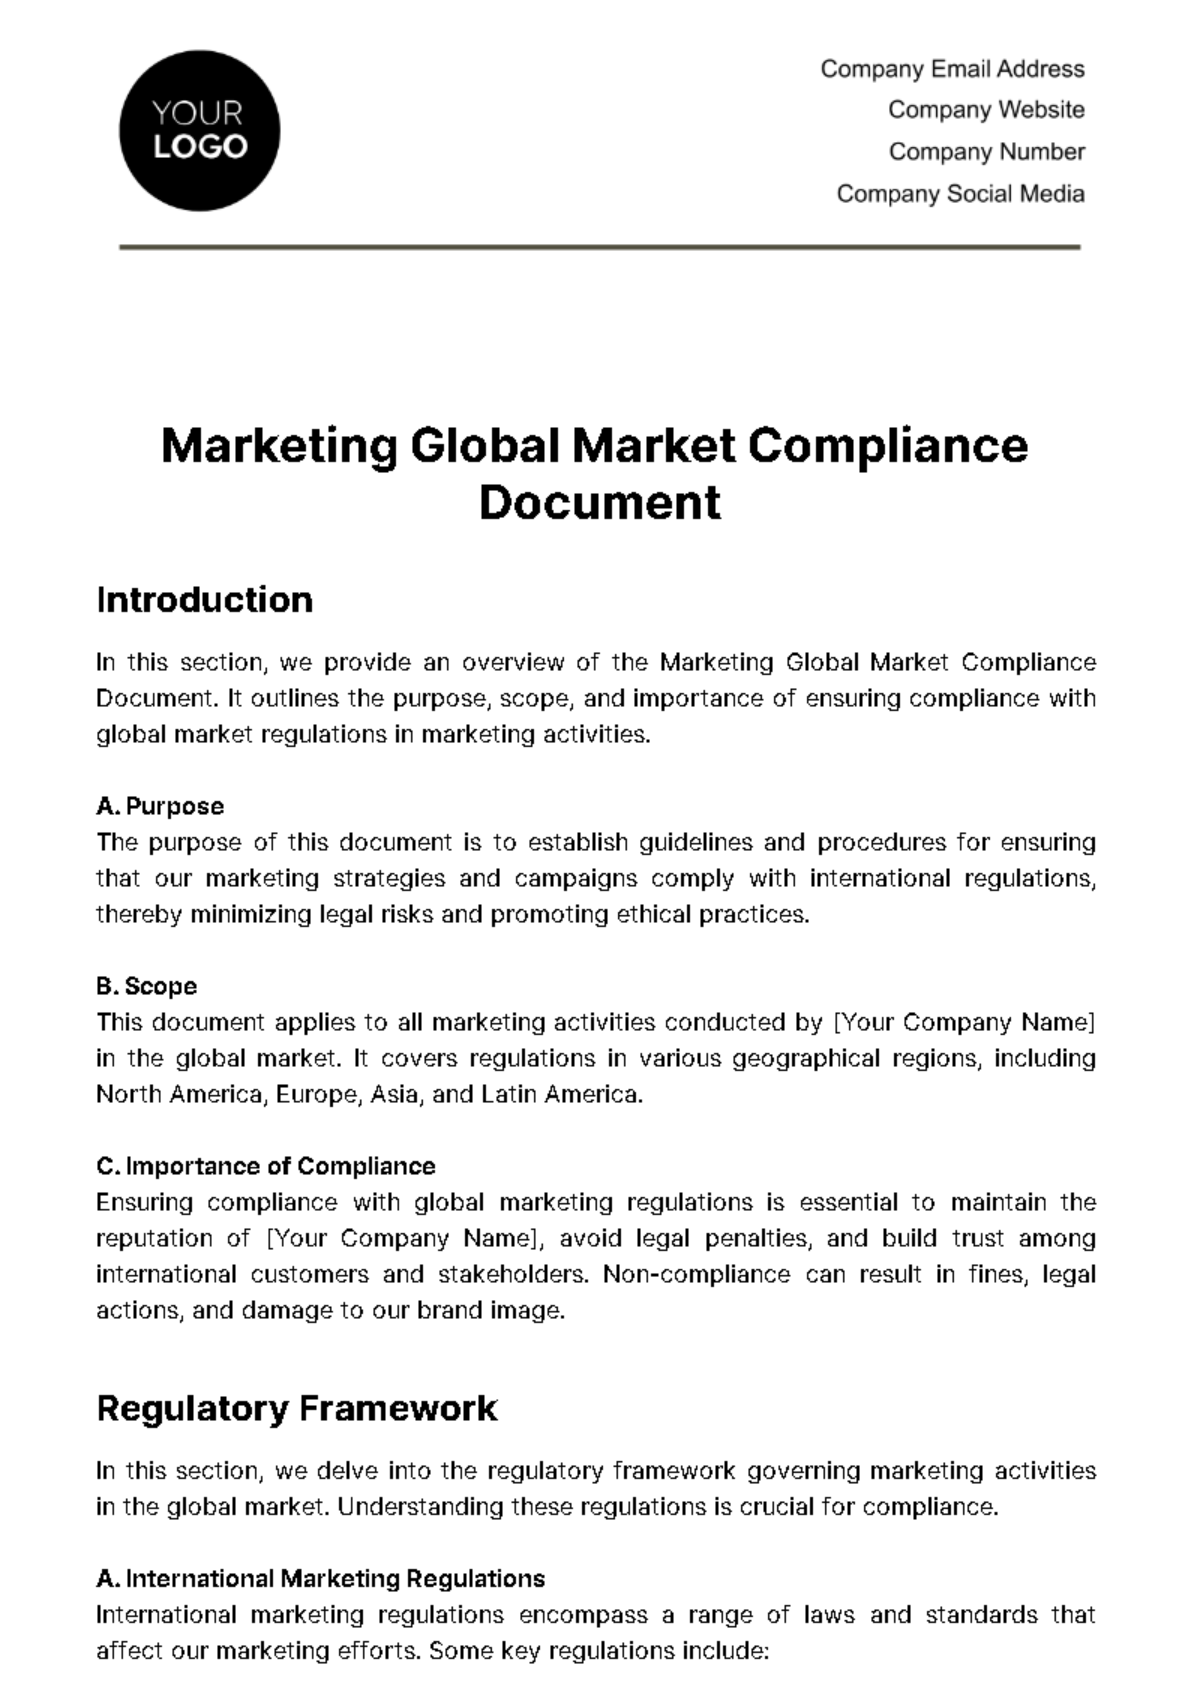 Free Marketing Global Market Compliance Document Template